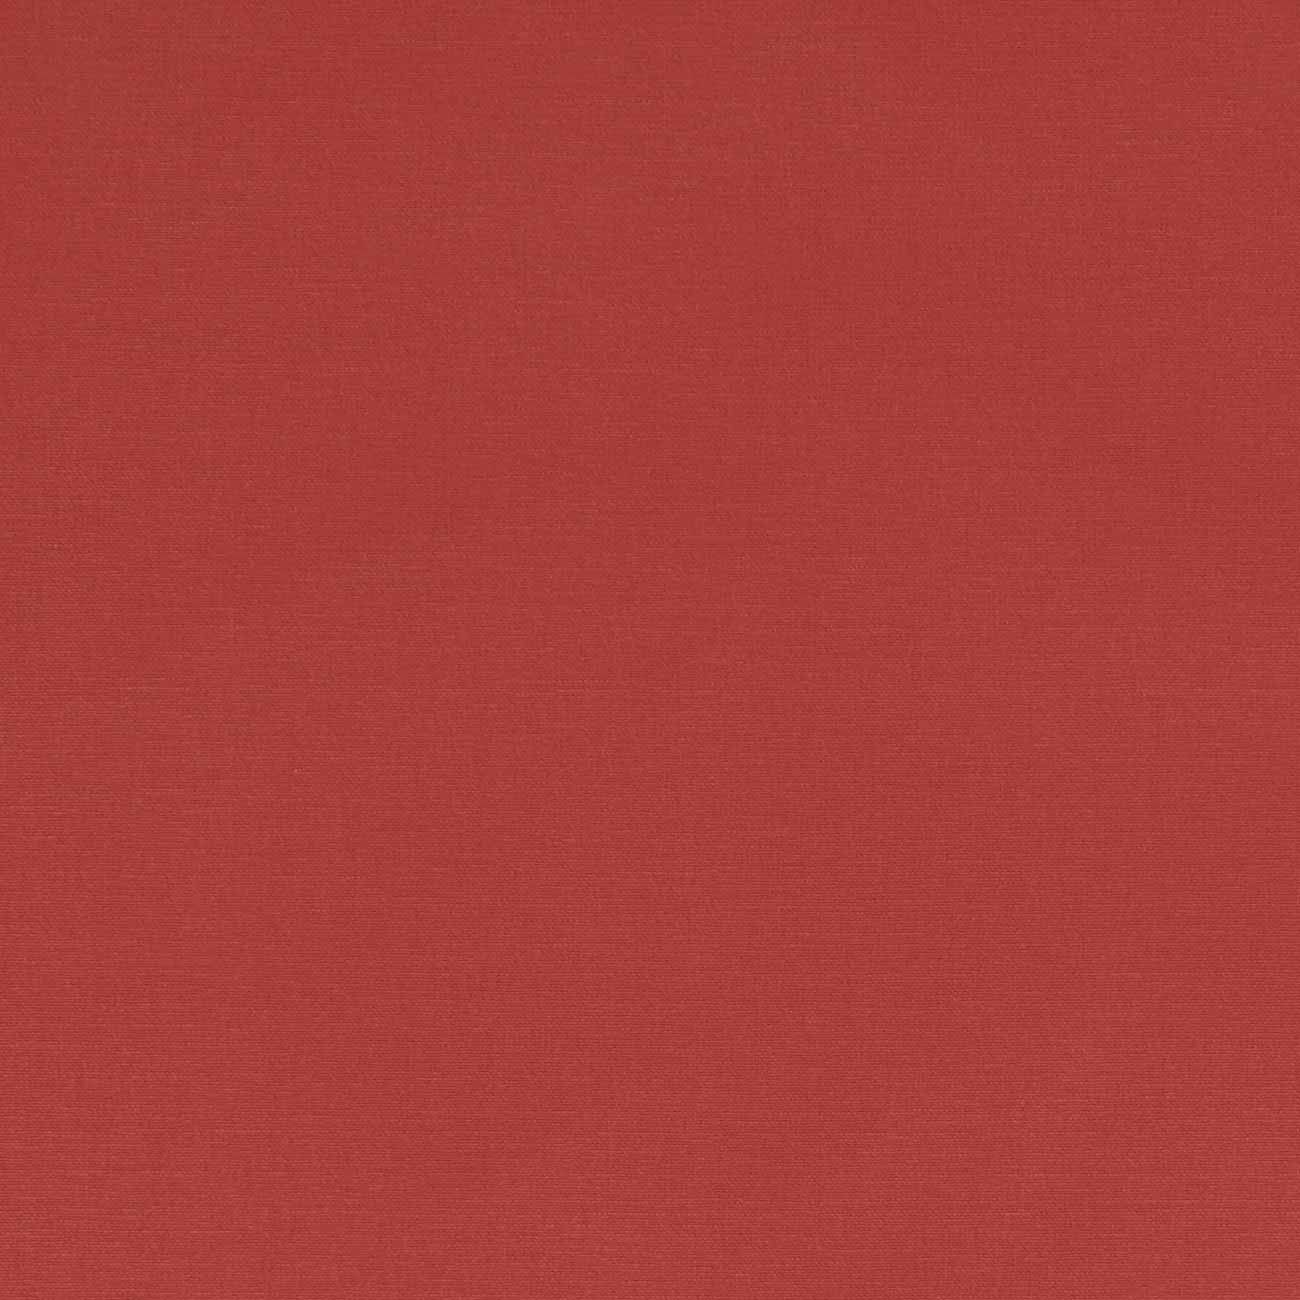 Alora Red Fabric by Studio G